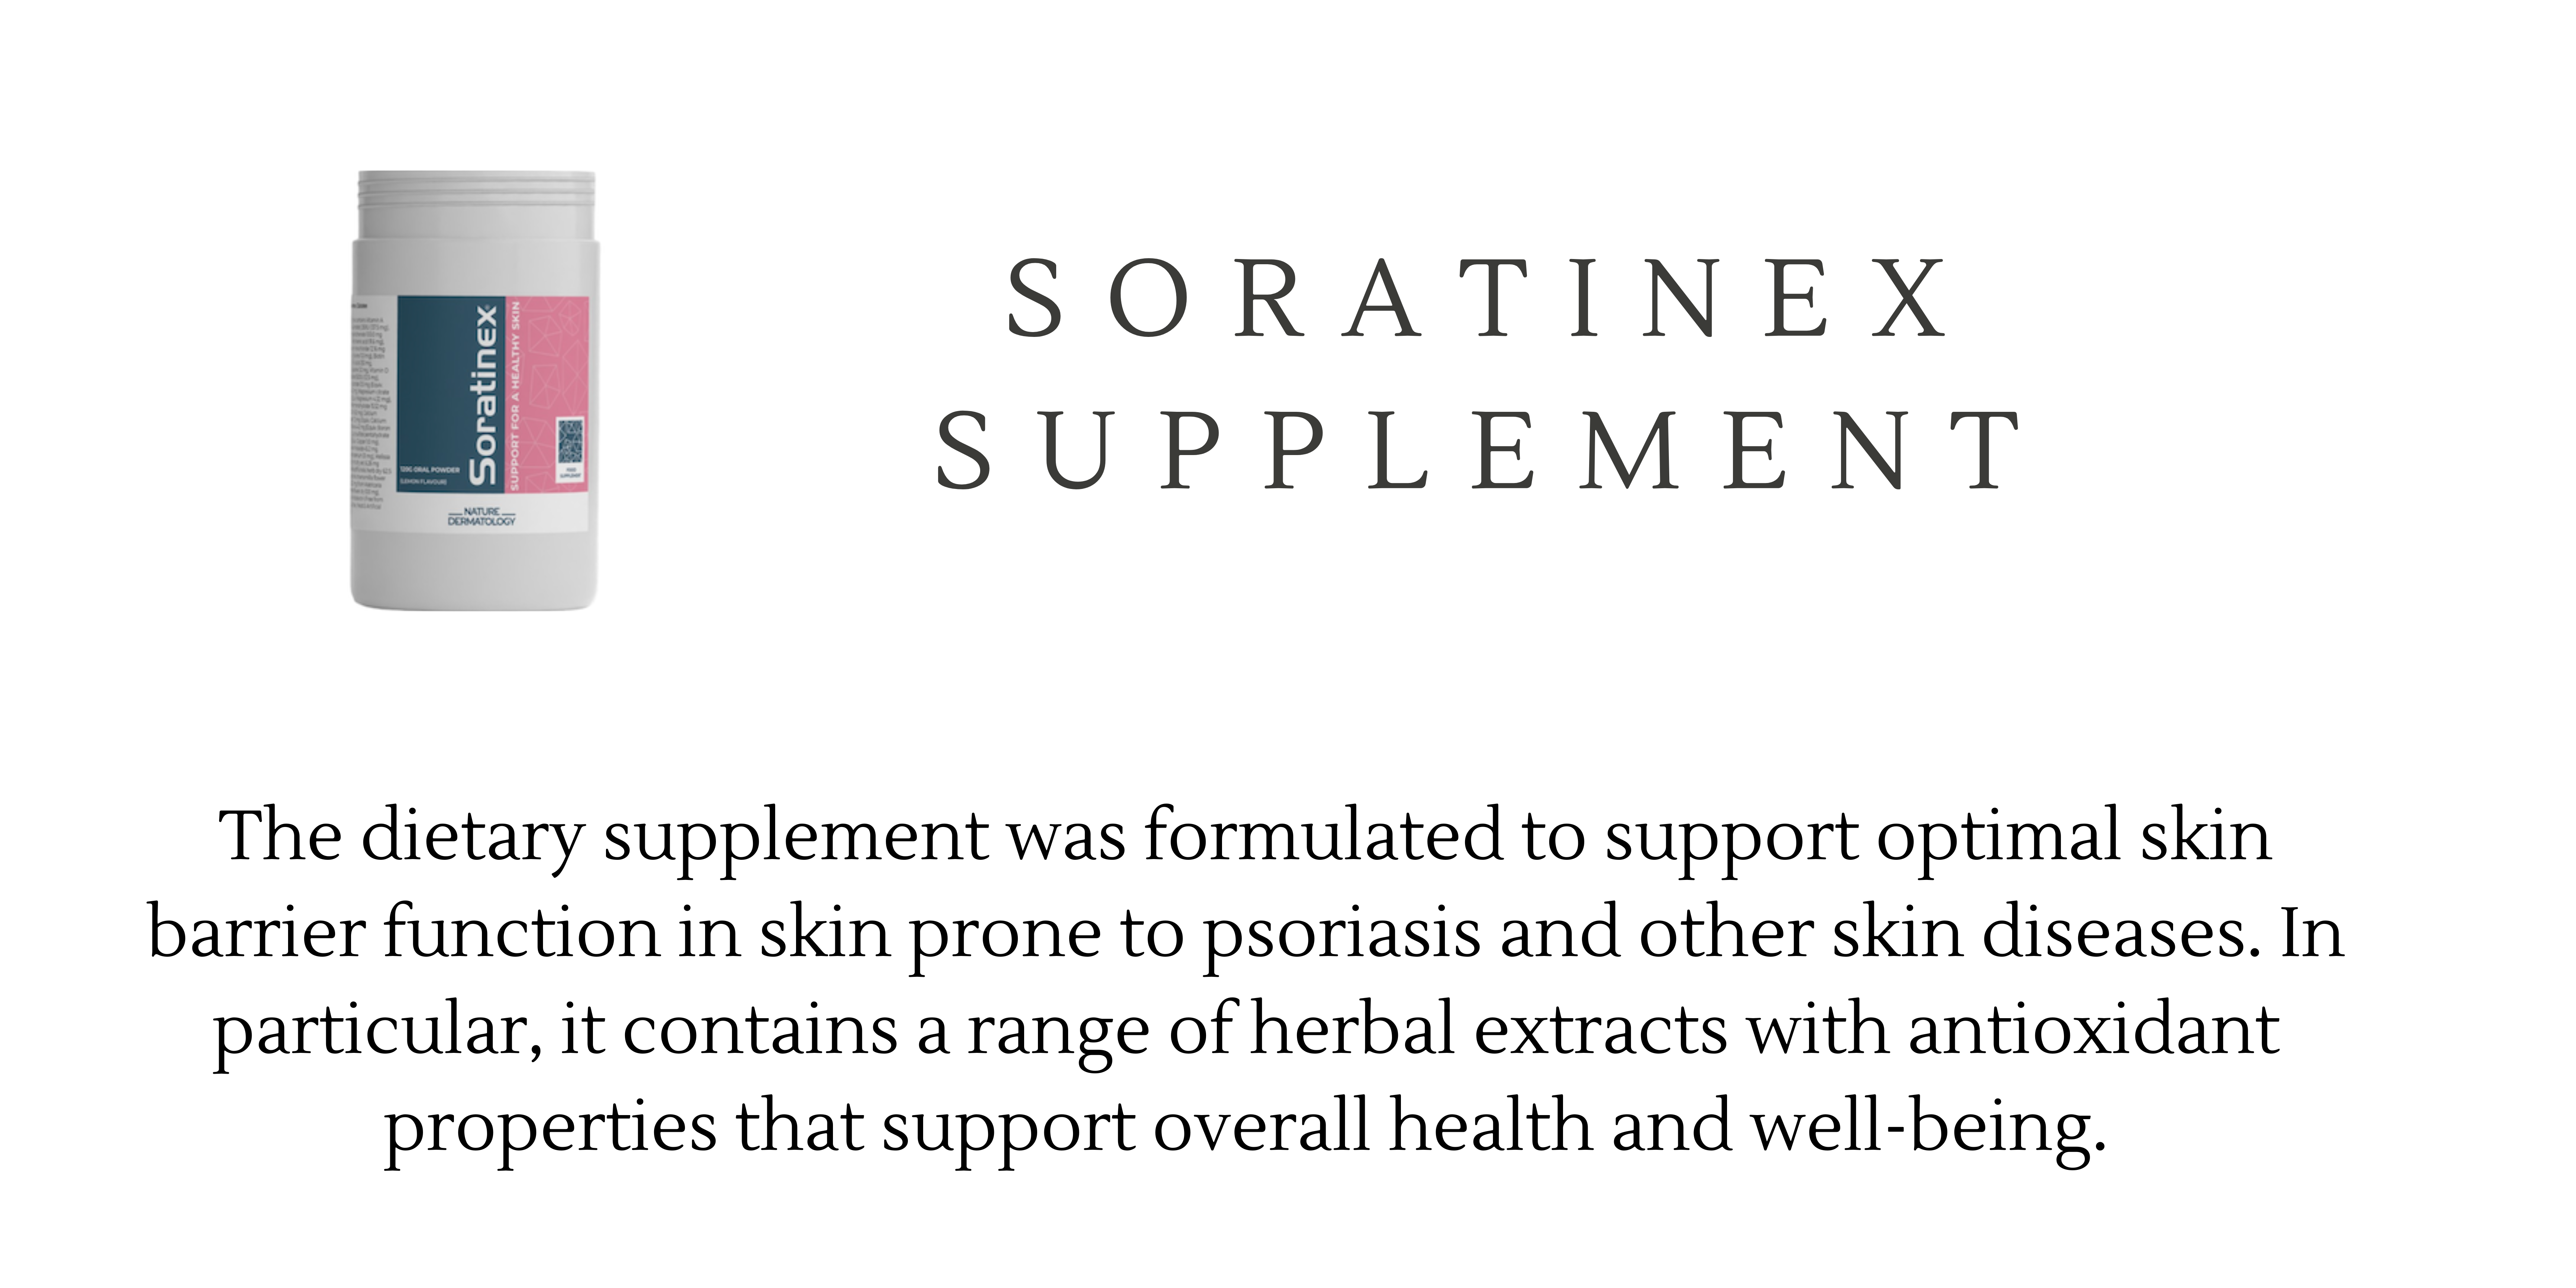 Soratinex Supplement 4